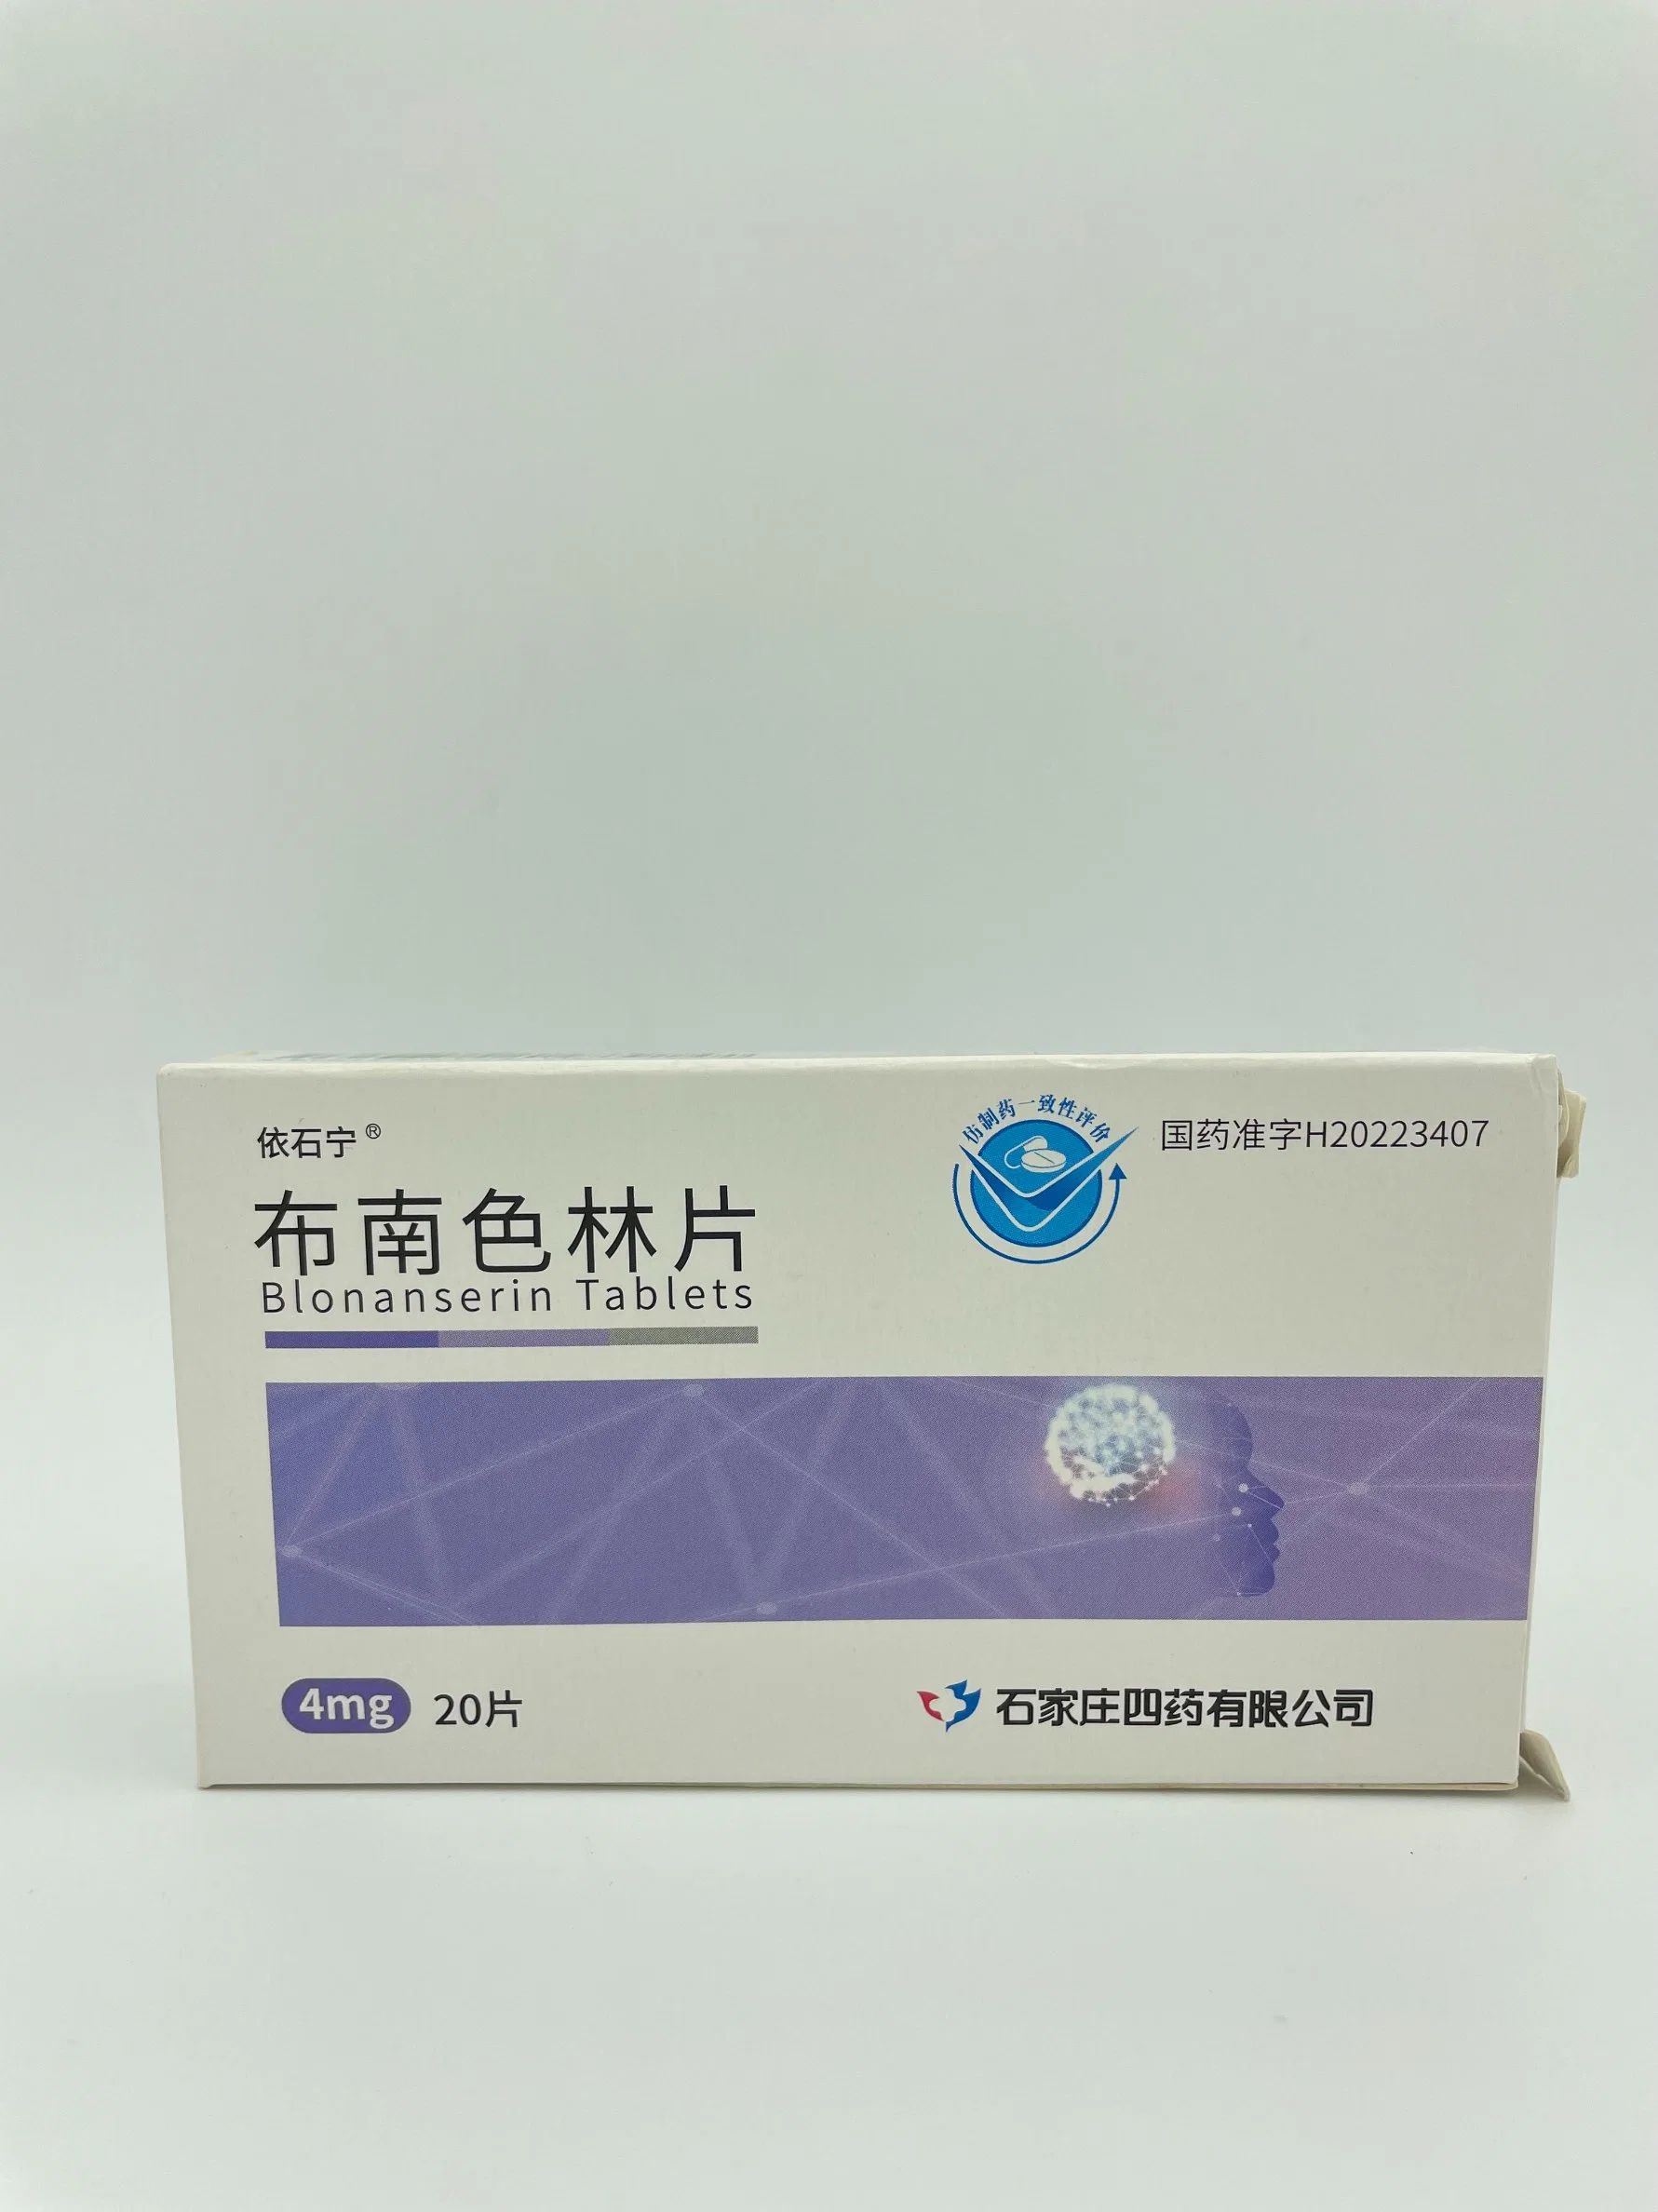 Blonanserin Tablets, preparação oral, medicamento